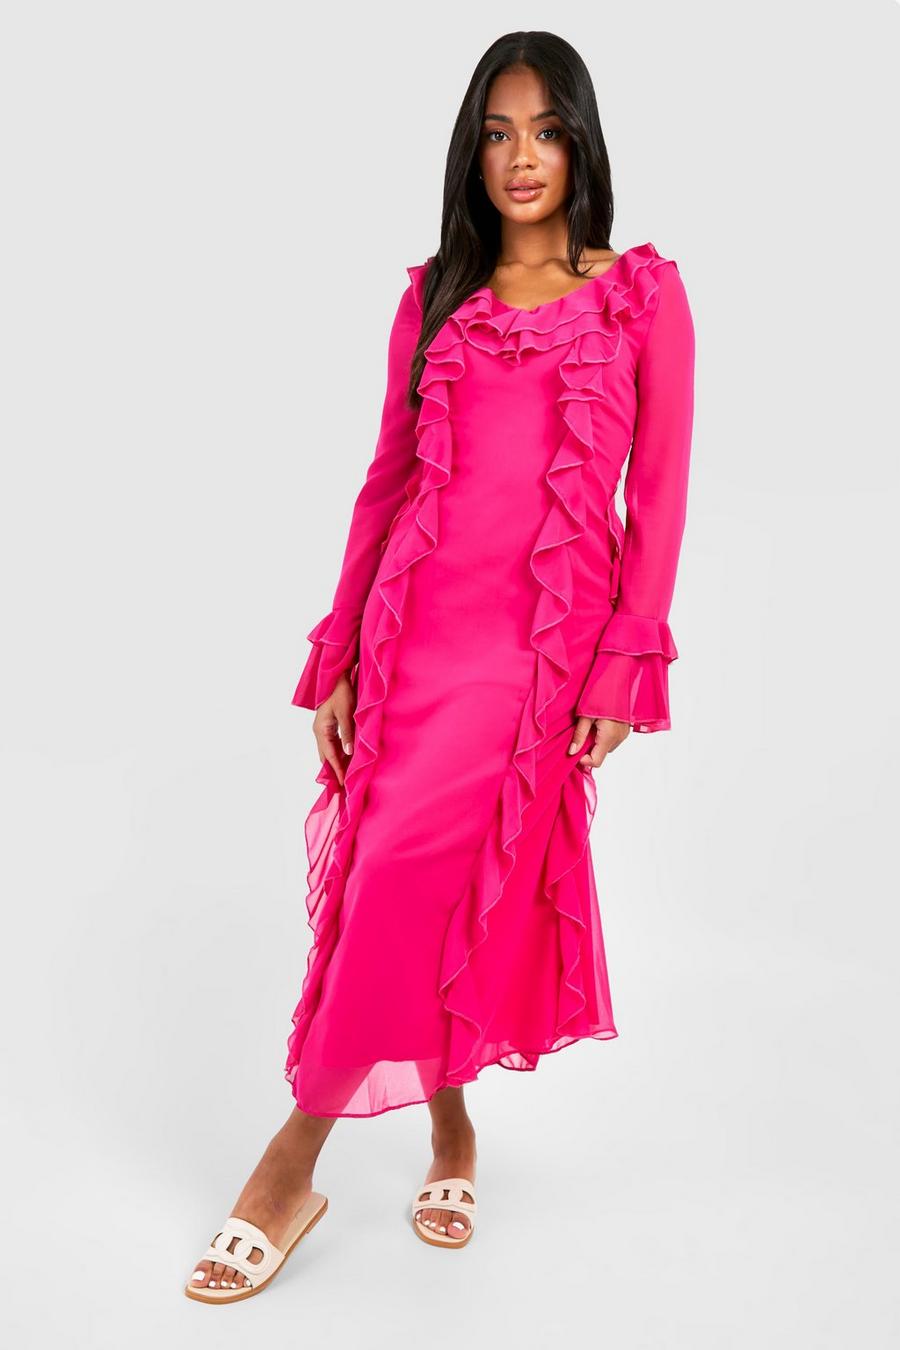 Hot pink rose Ruffle Detail Midaxi Dress